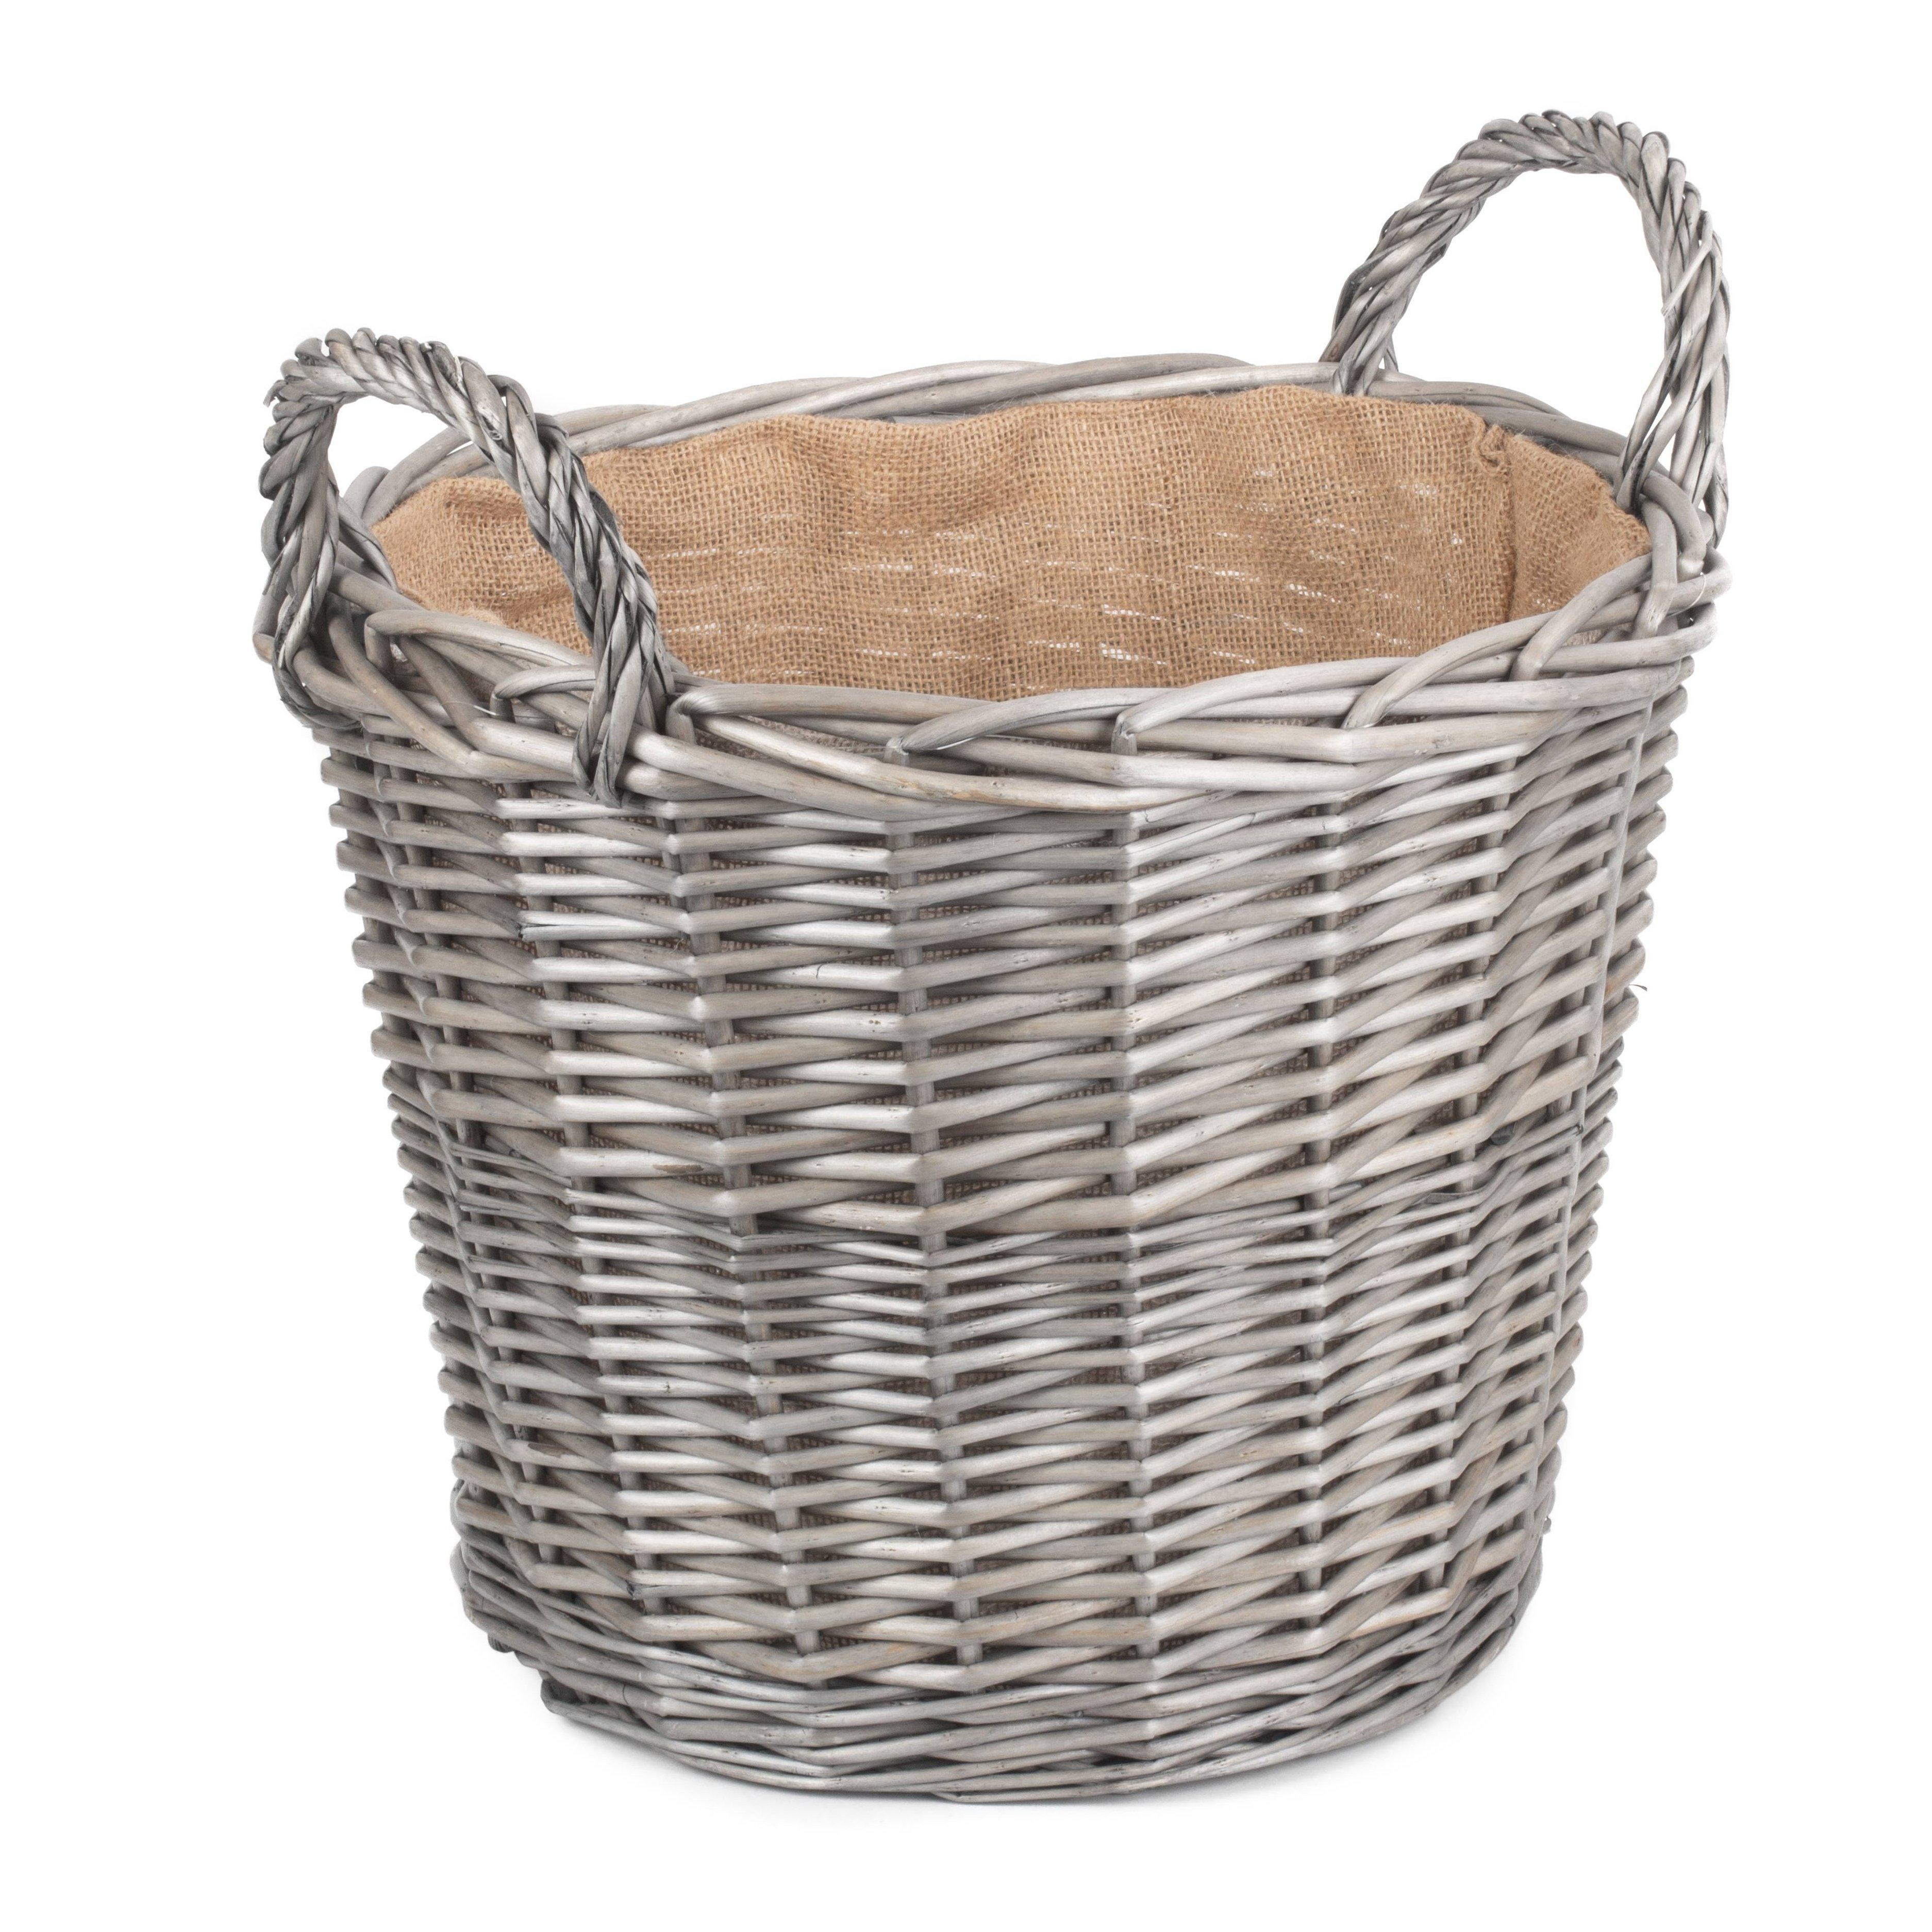 Wicker Antique Wash Finish Lined Log Baskets - image 1